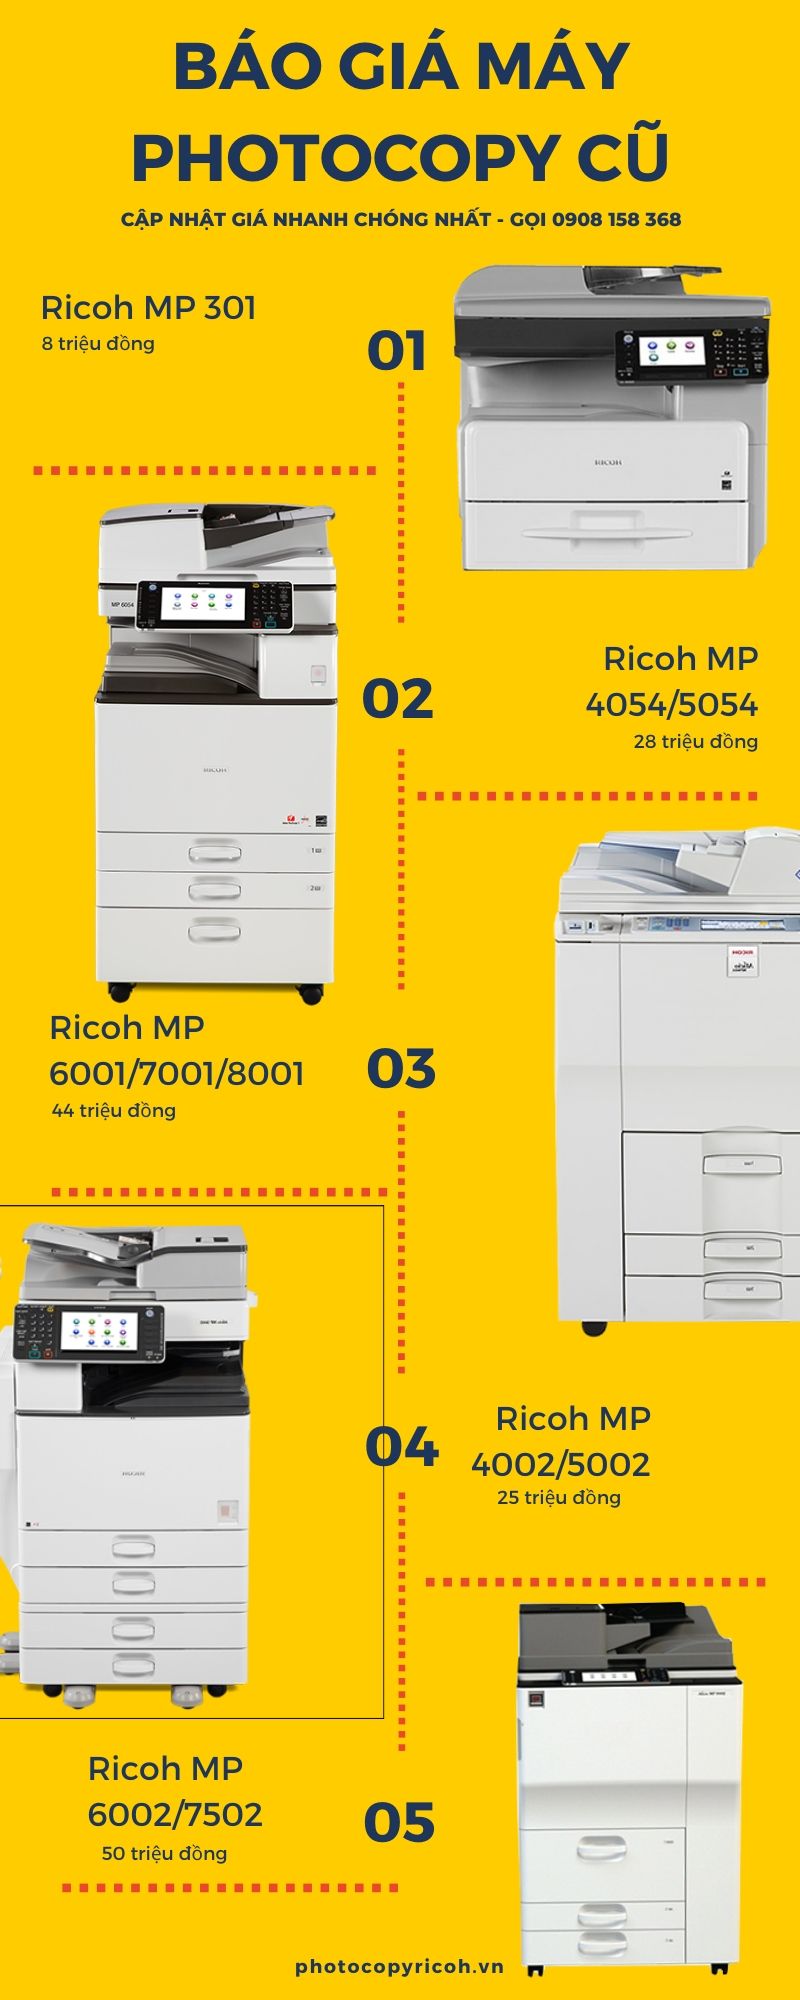 Báo giá bán máy photocopy cũ 2020